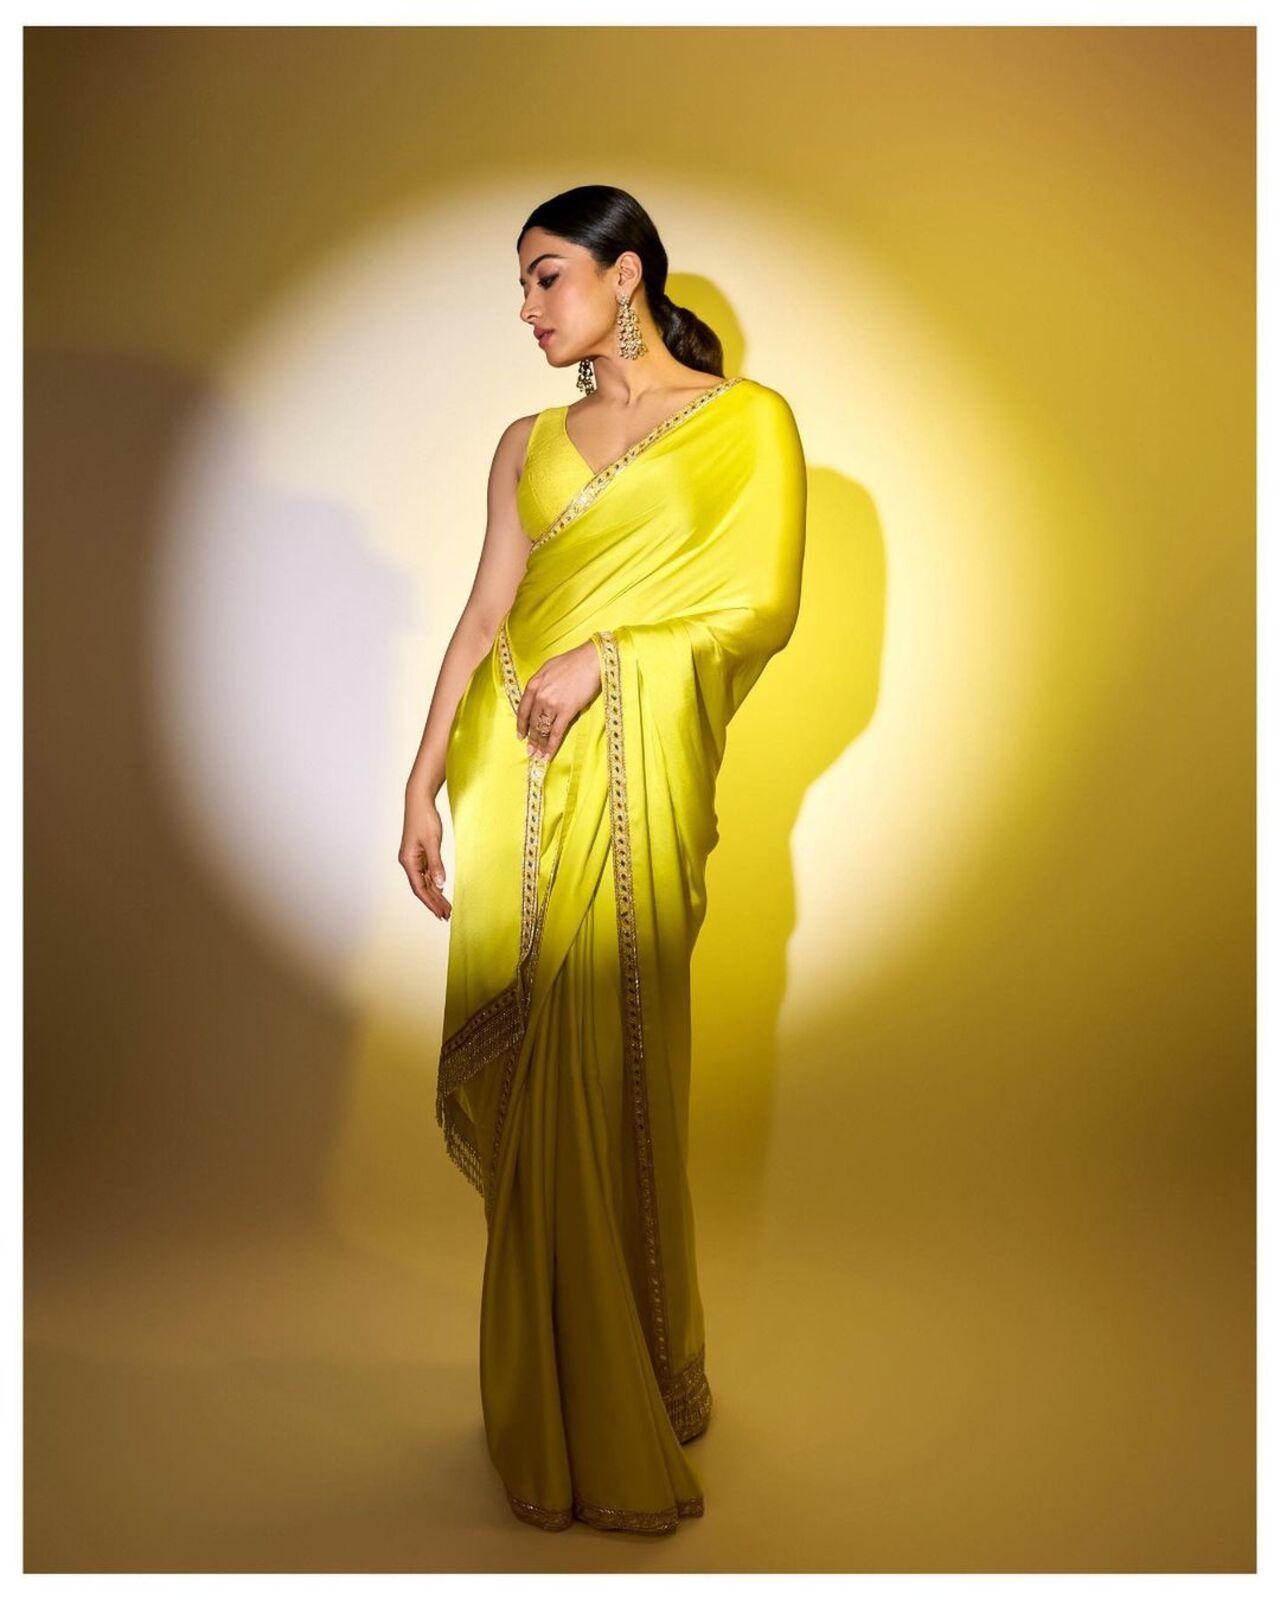 Rashmika Mandanna shows how to shine in a bright lemon yellow saree